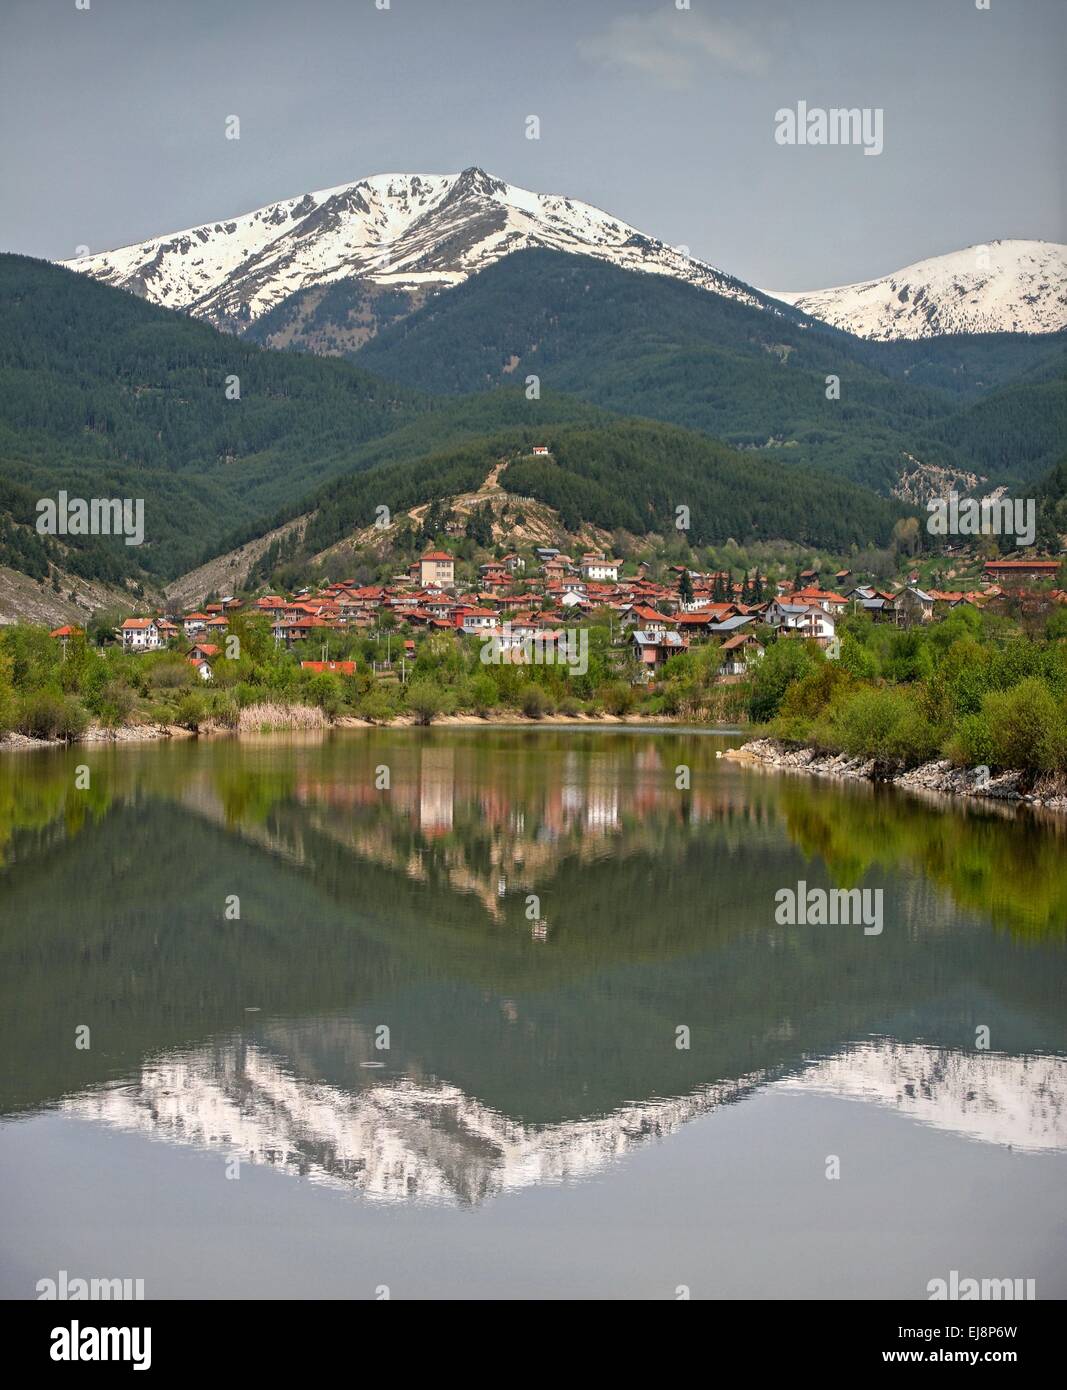 Mountain village reflection in the lake Stock Photo